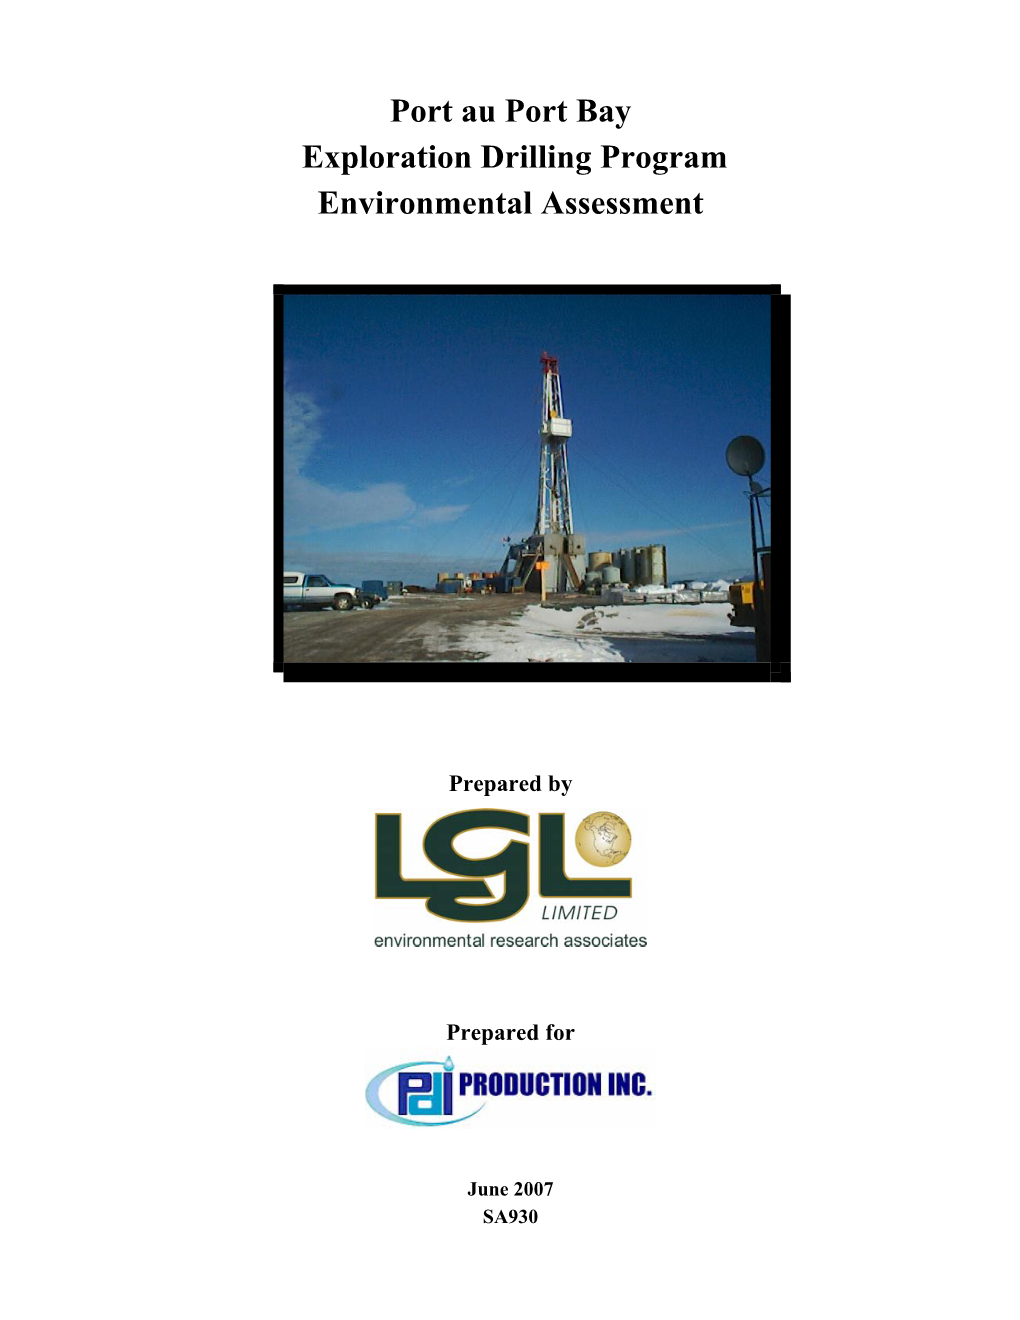 Port Au Port Bay Exploration Drilling Program Environmental Assessment